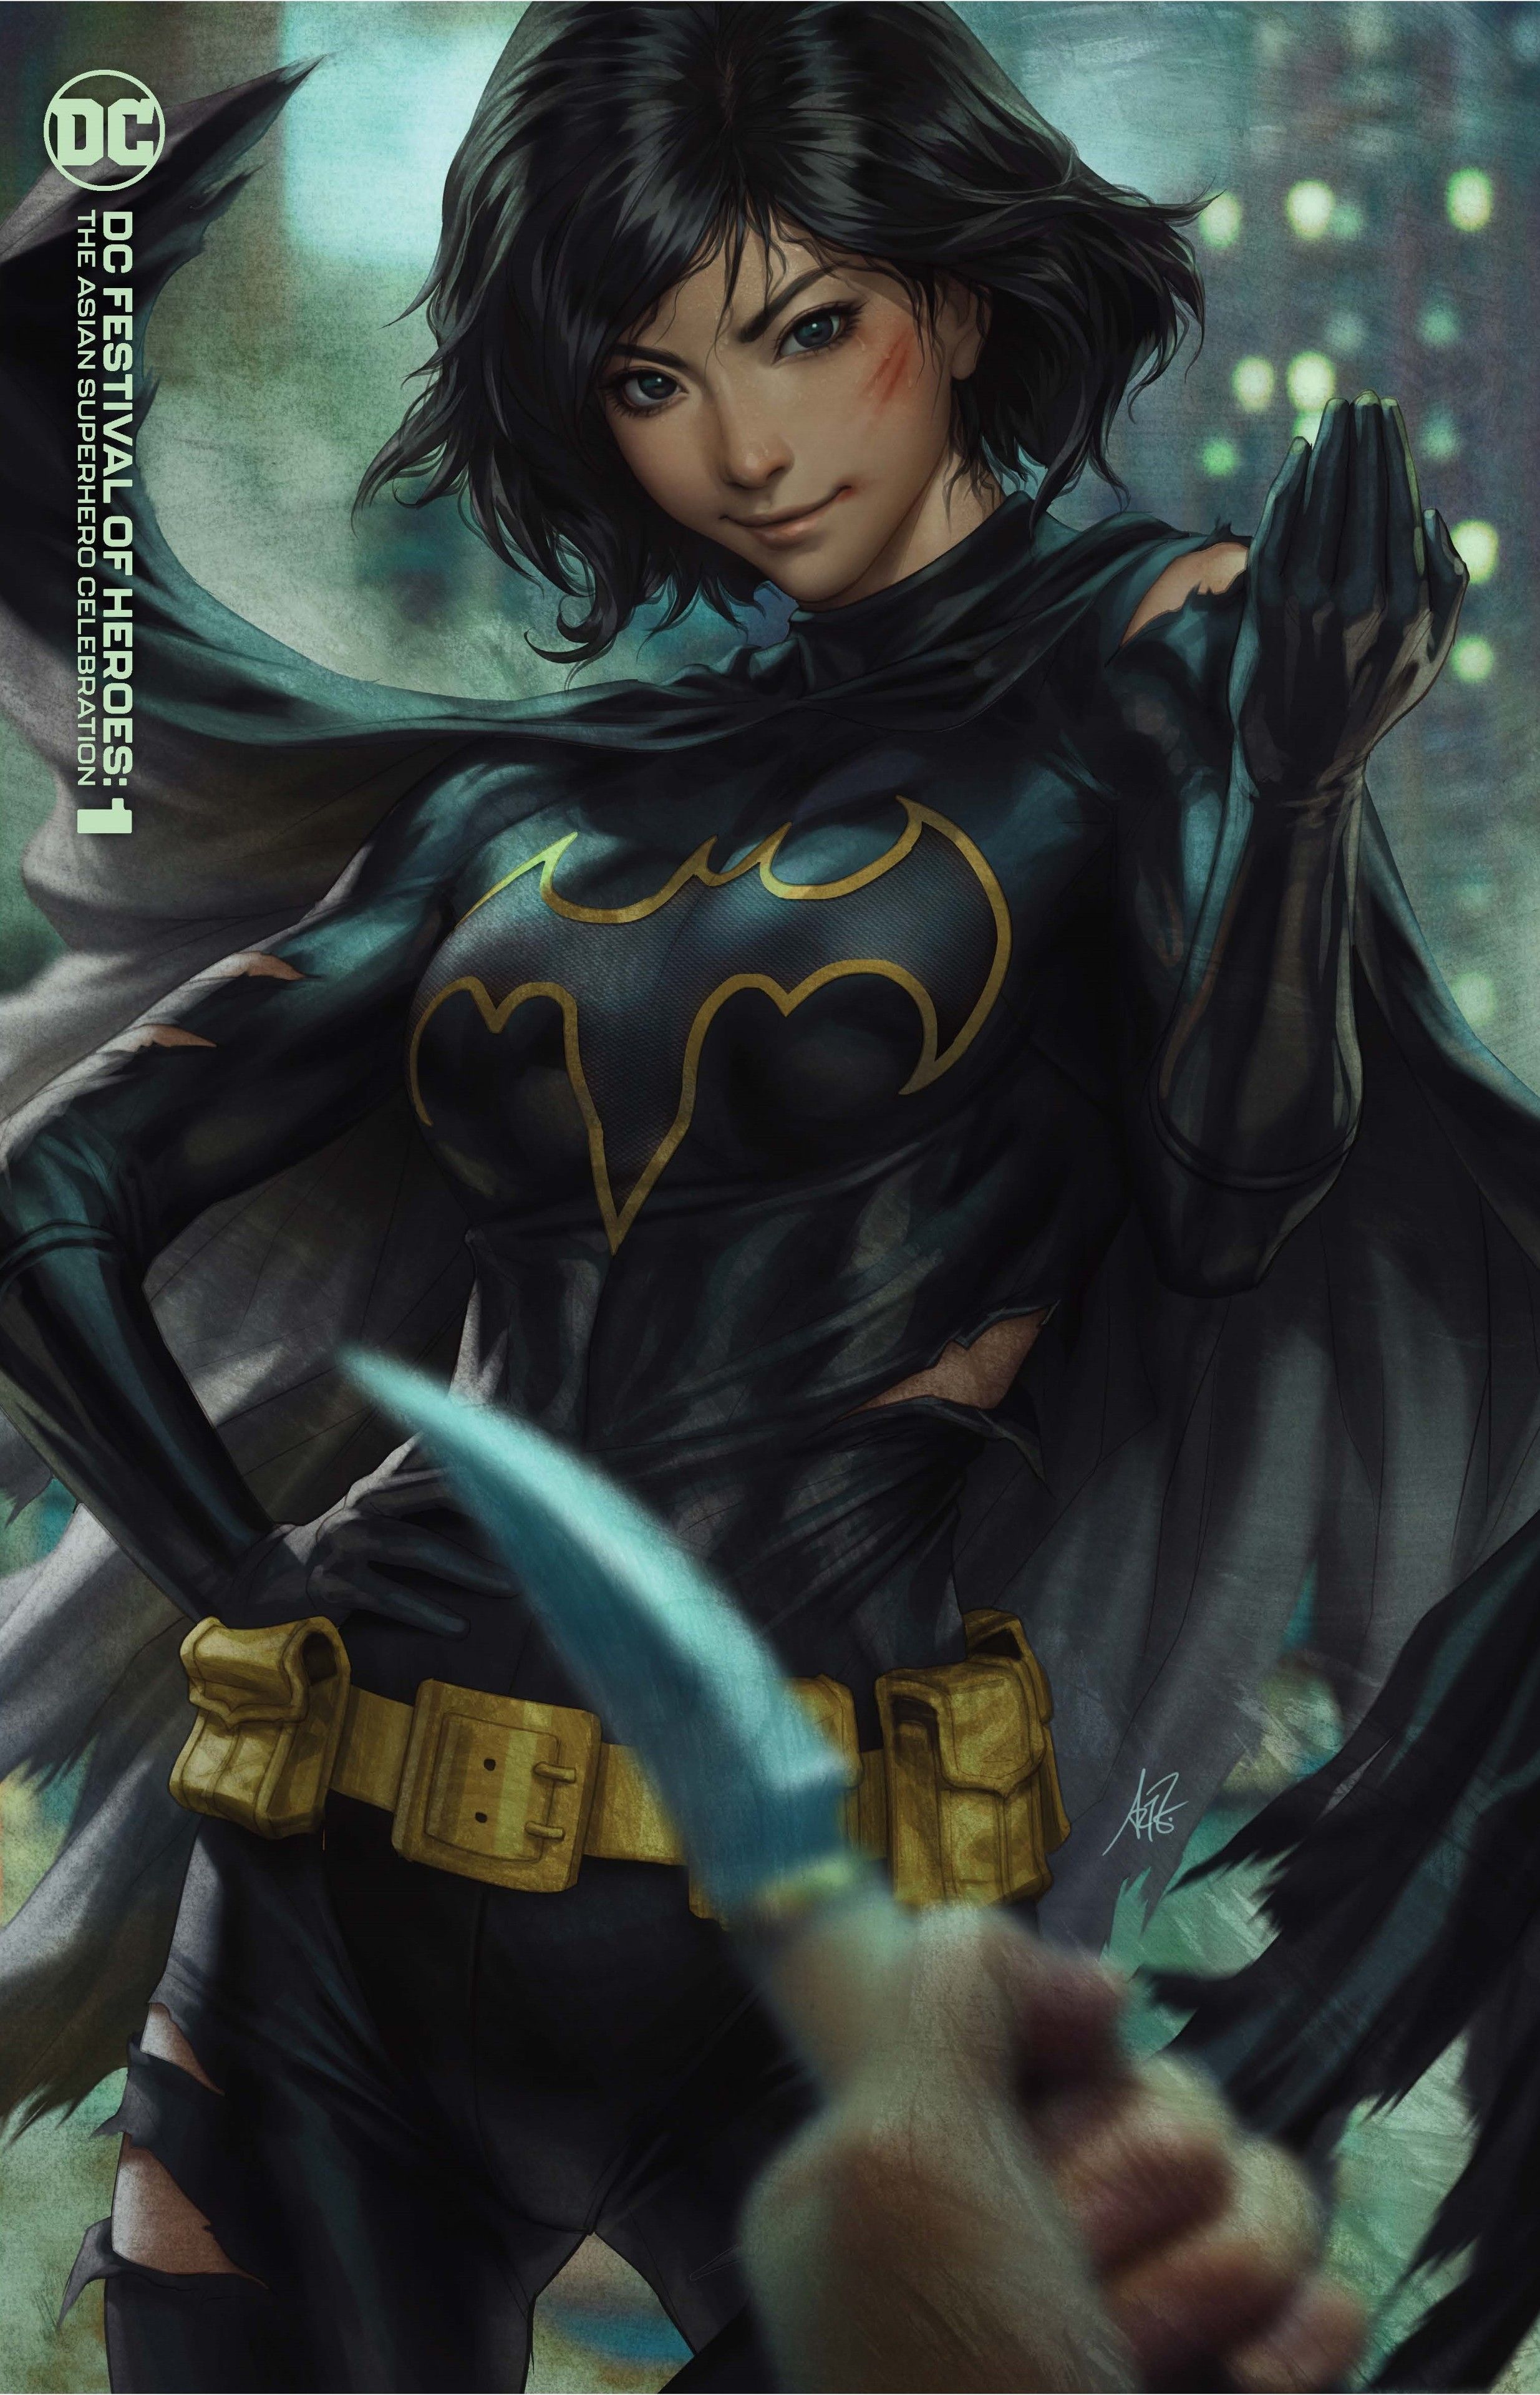 Cassandra Cain Batgirl Gets Stunning Cover Art Ahead Of New Stories Informone 2196